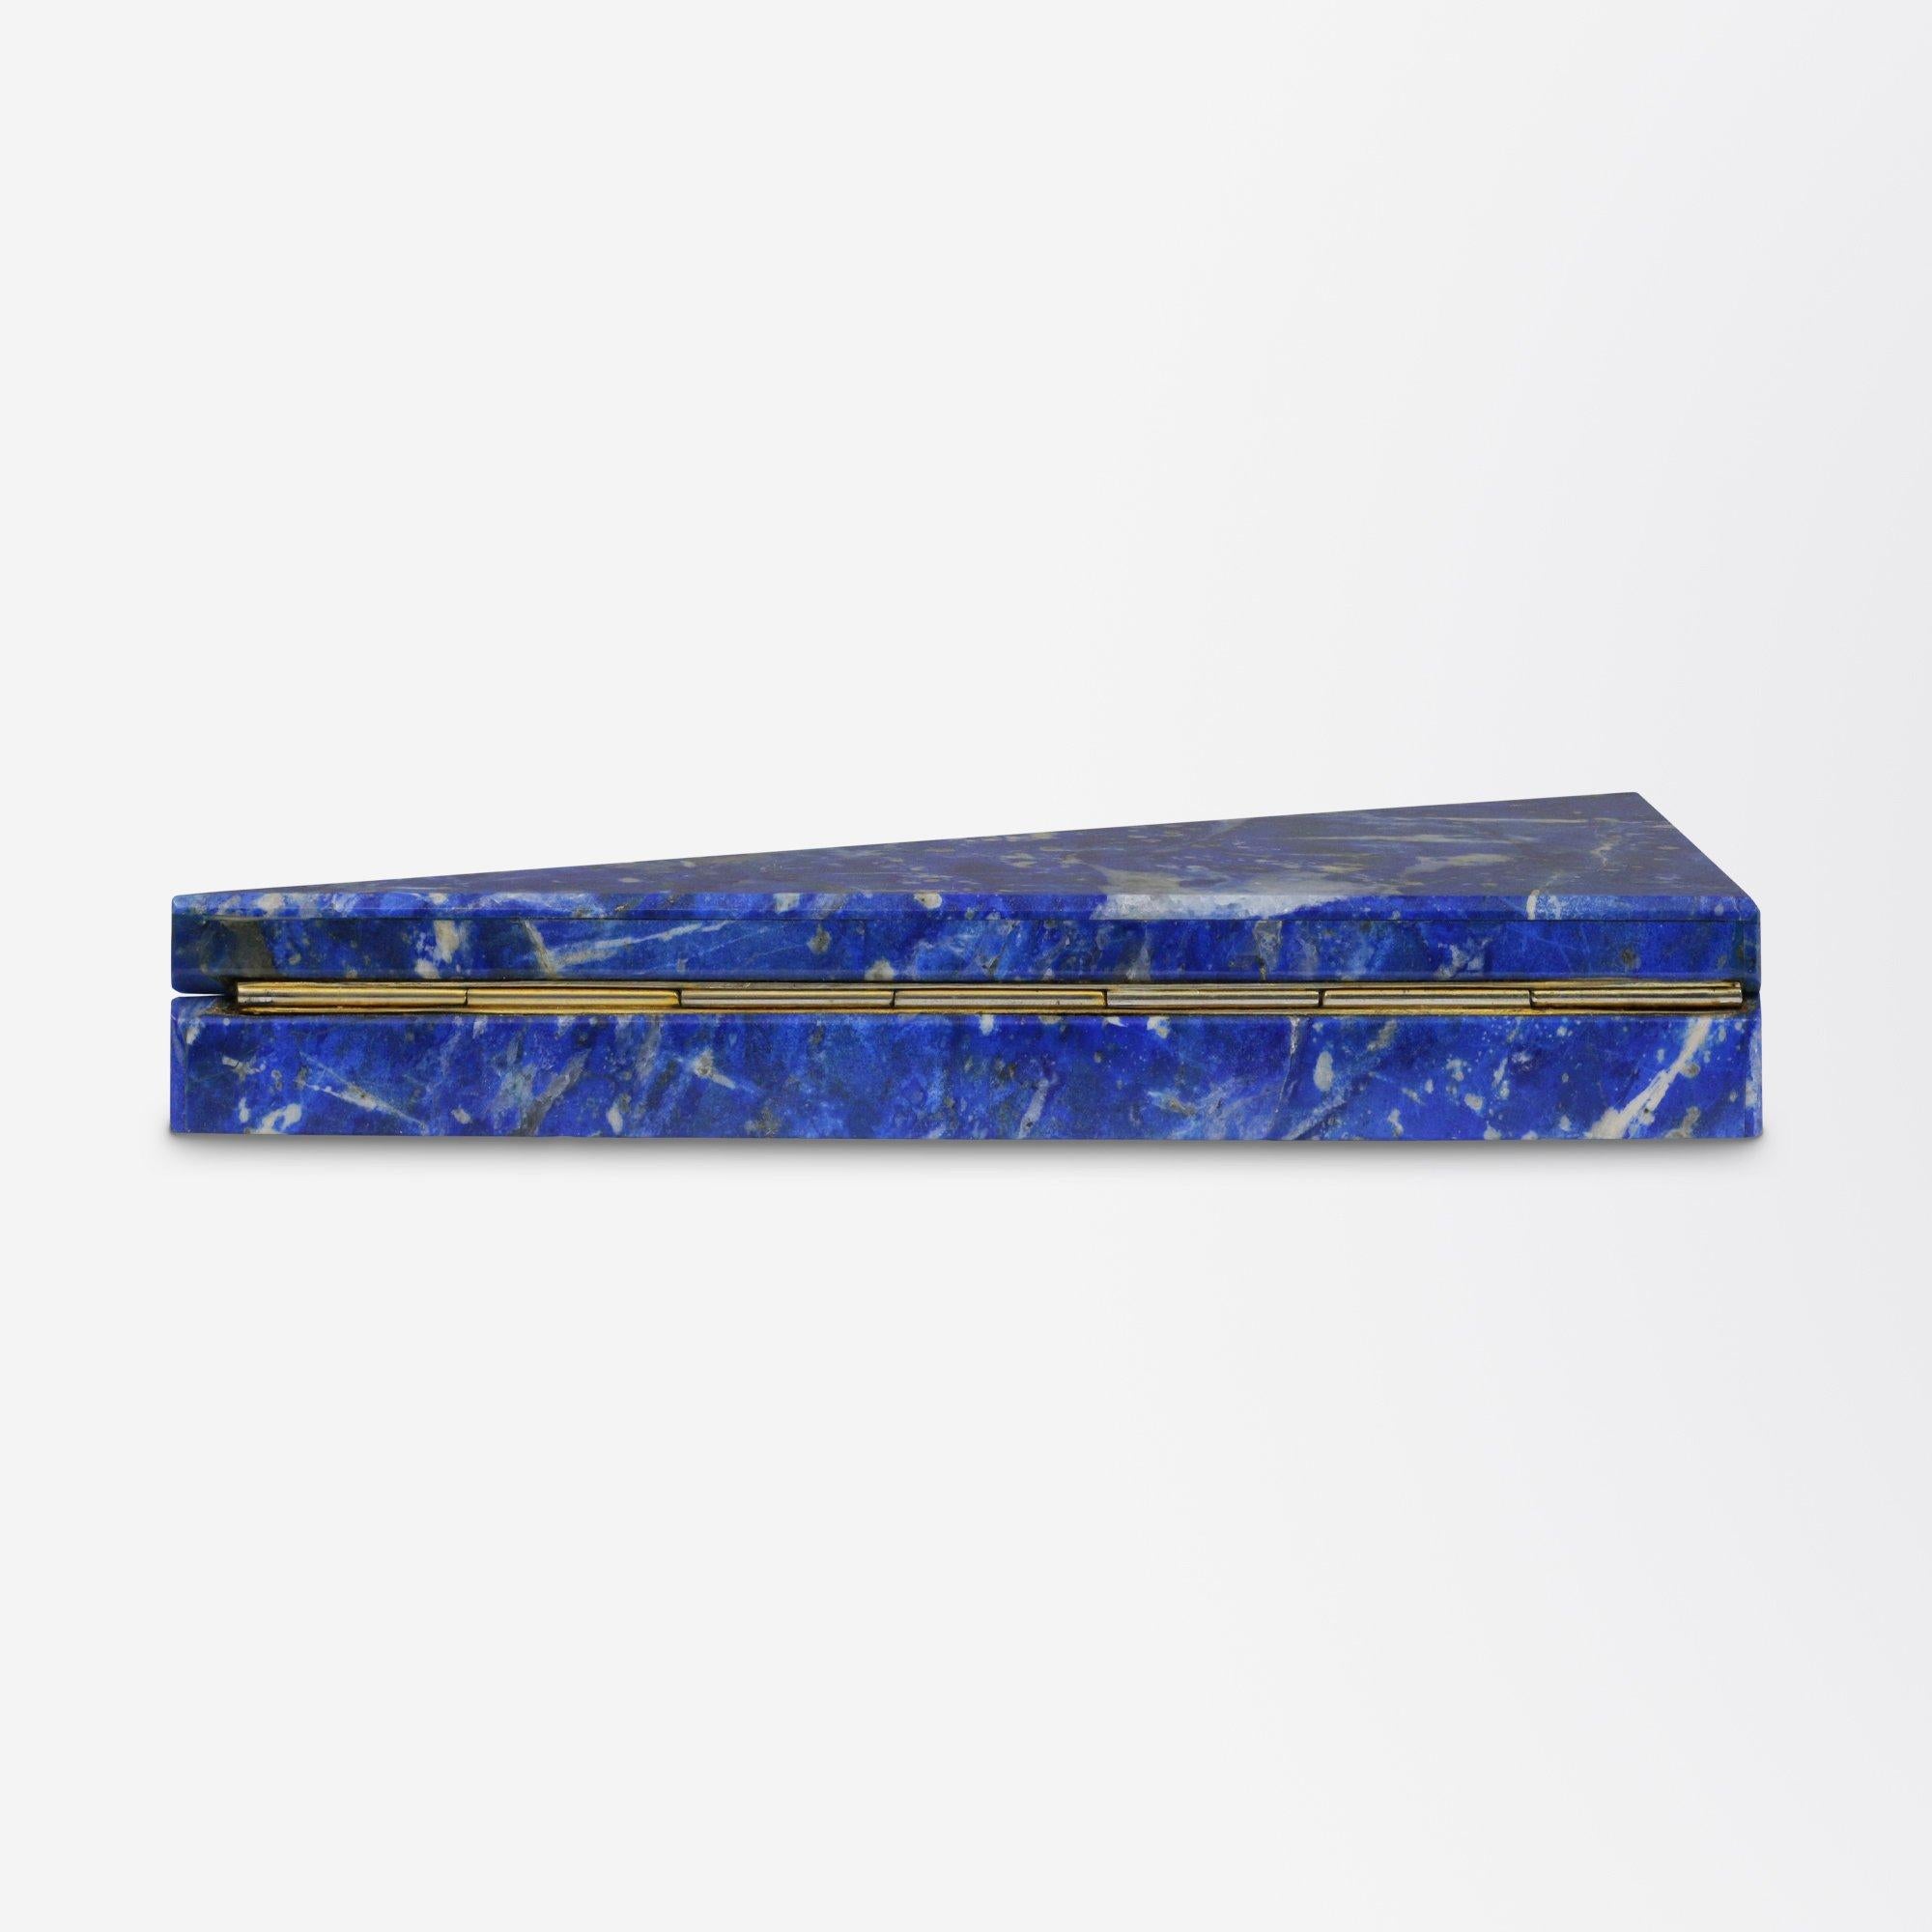 Uncut Triangular Lapis Lazuli Specimen Box from Florence